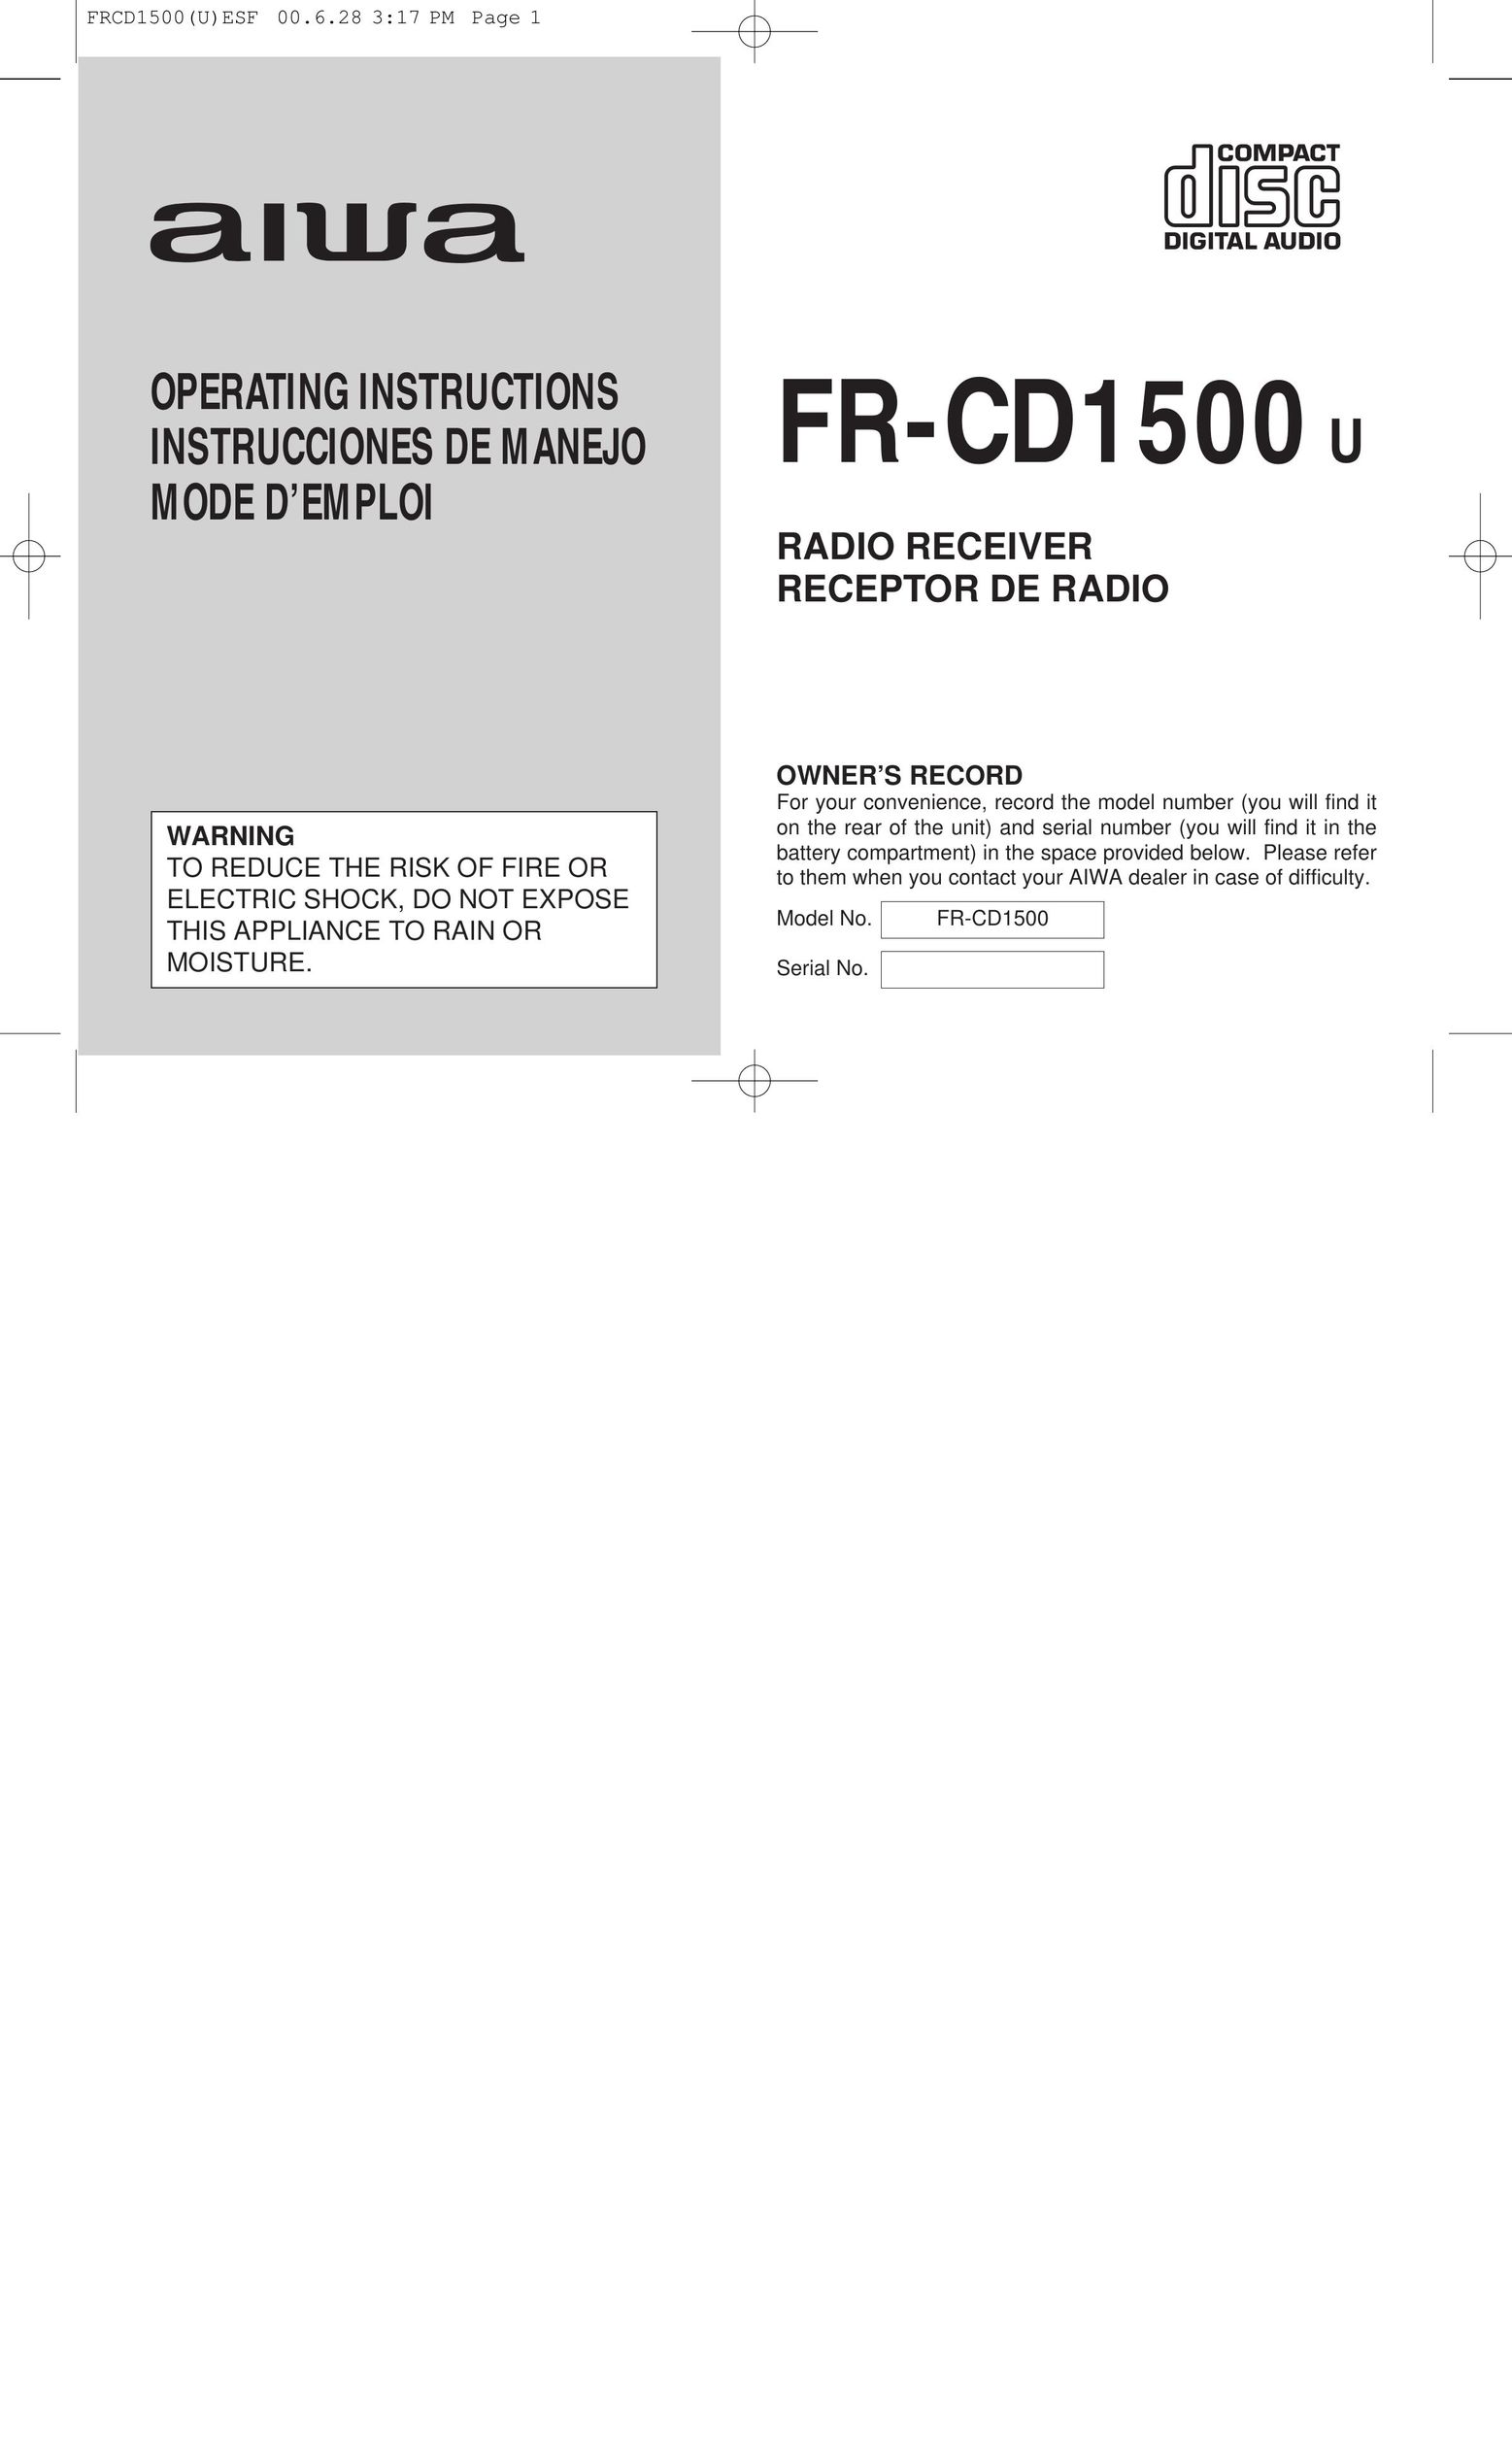 Aiwa FR-CD1500 Radio User Manual